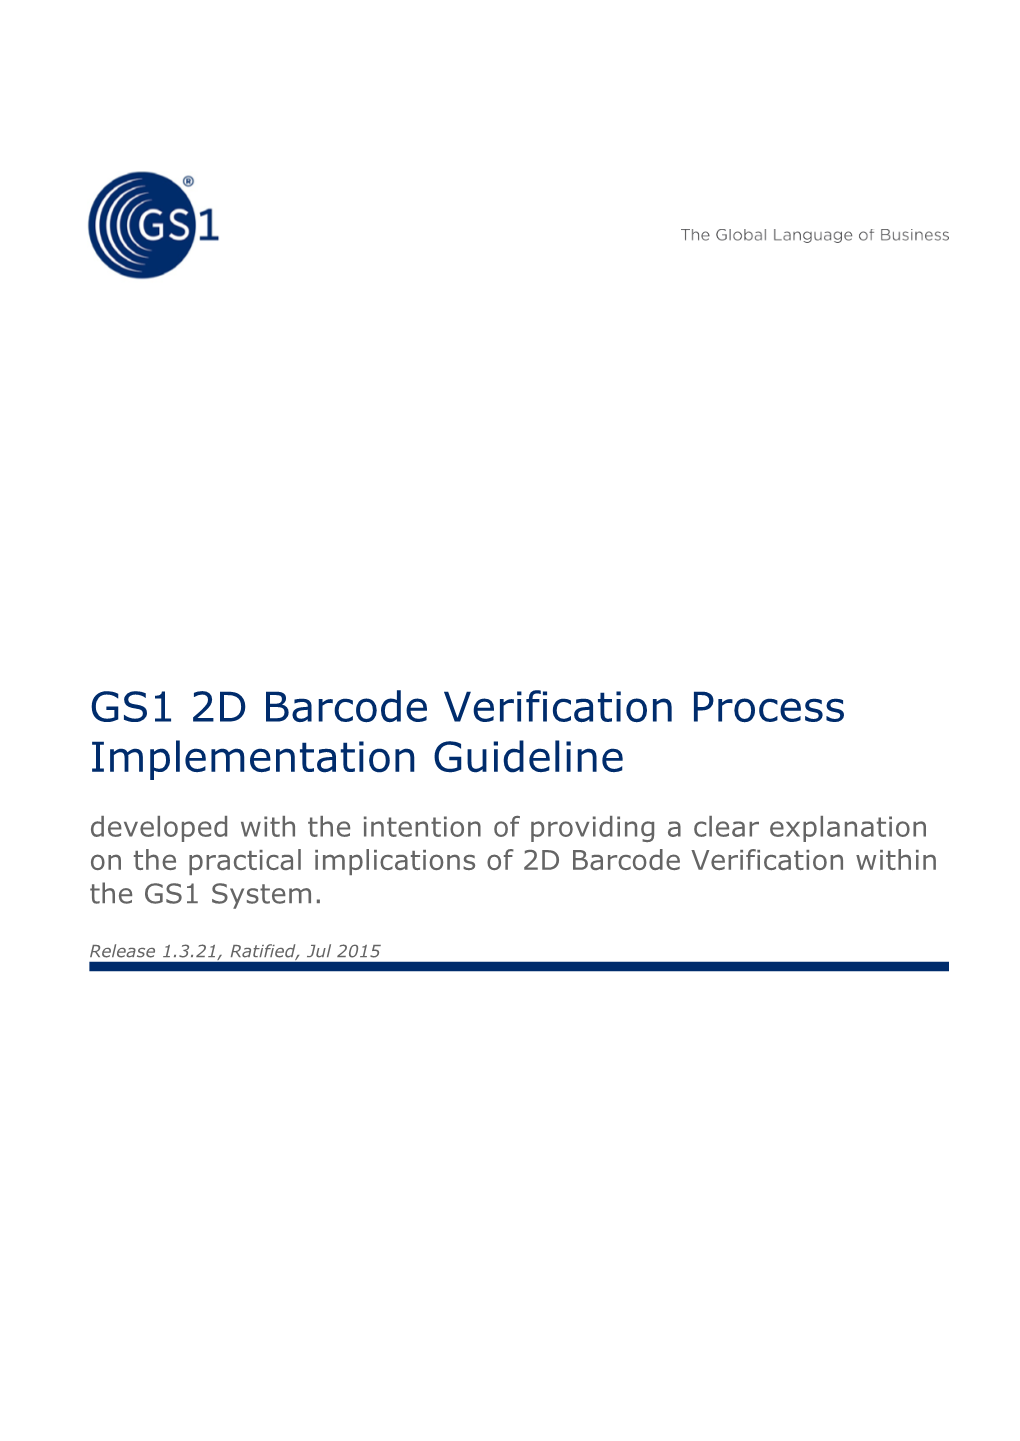 GS1 2D Barcode Verification Process Implementation Guideline